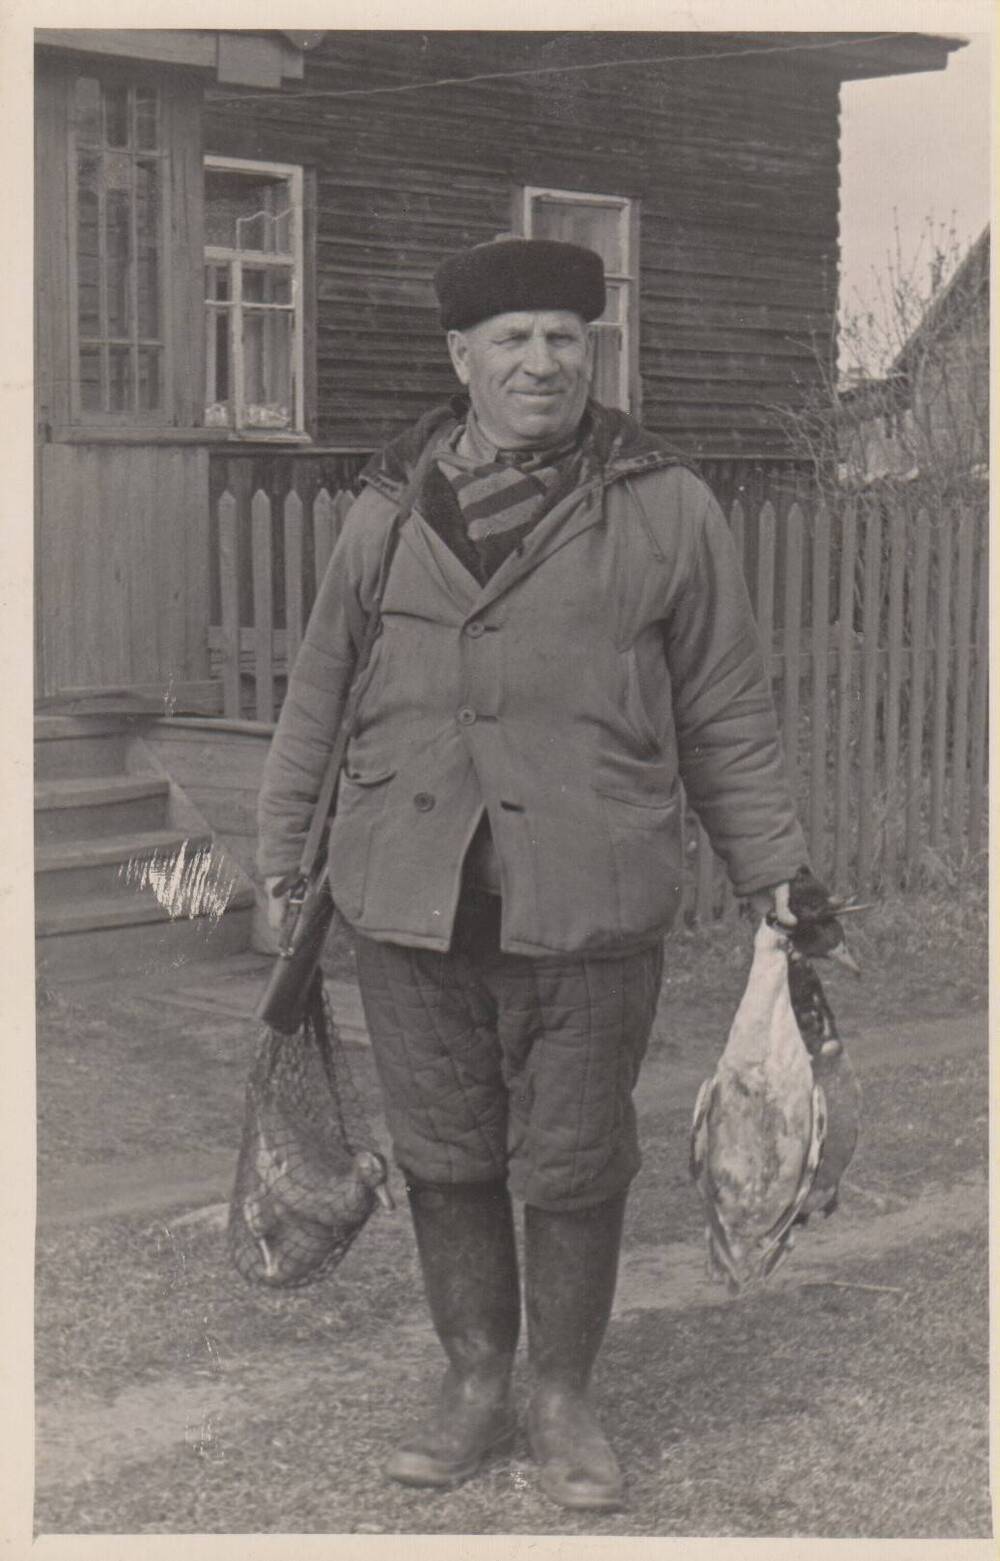 Фотография Лукина Н.И. на фоне дома в руках дичь.